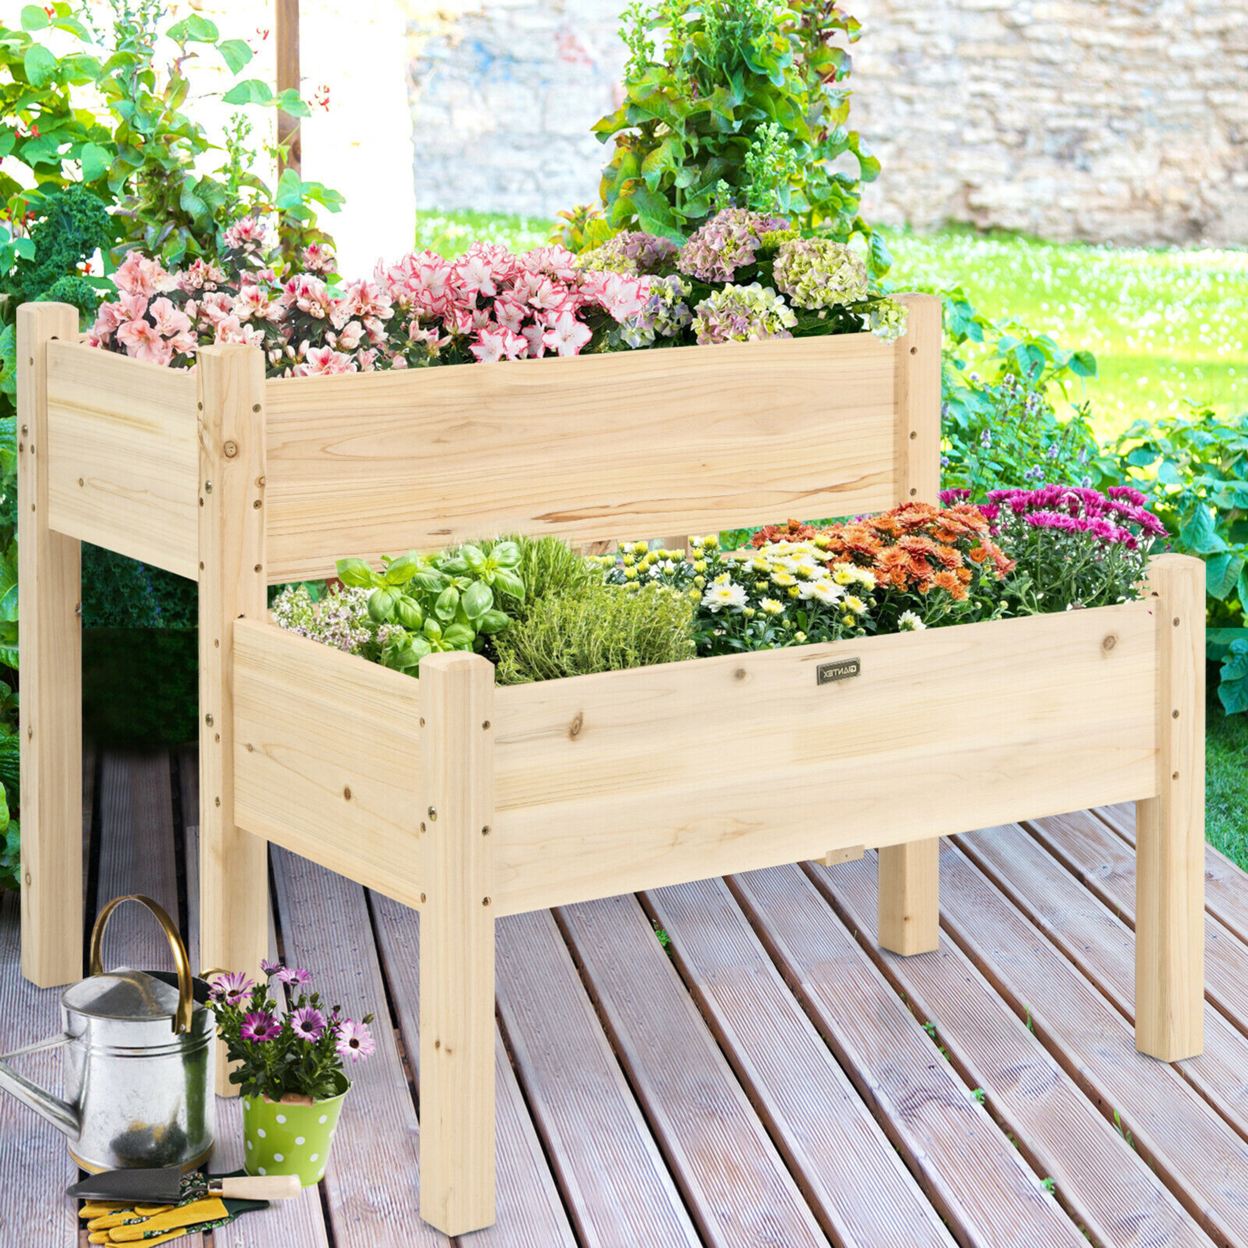 2 Tier Wooden Raised Garden Bed Elevated Planter Box W/Legs Drain Holes